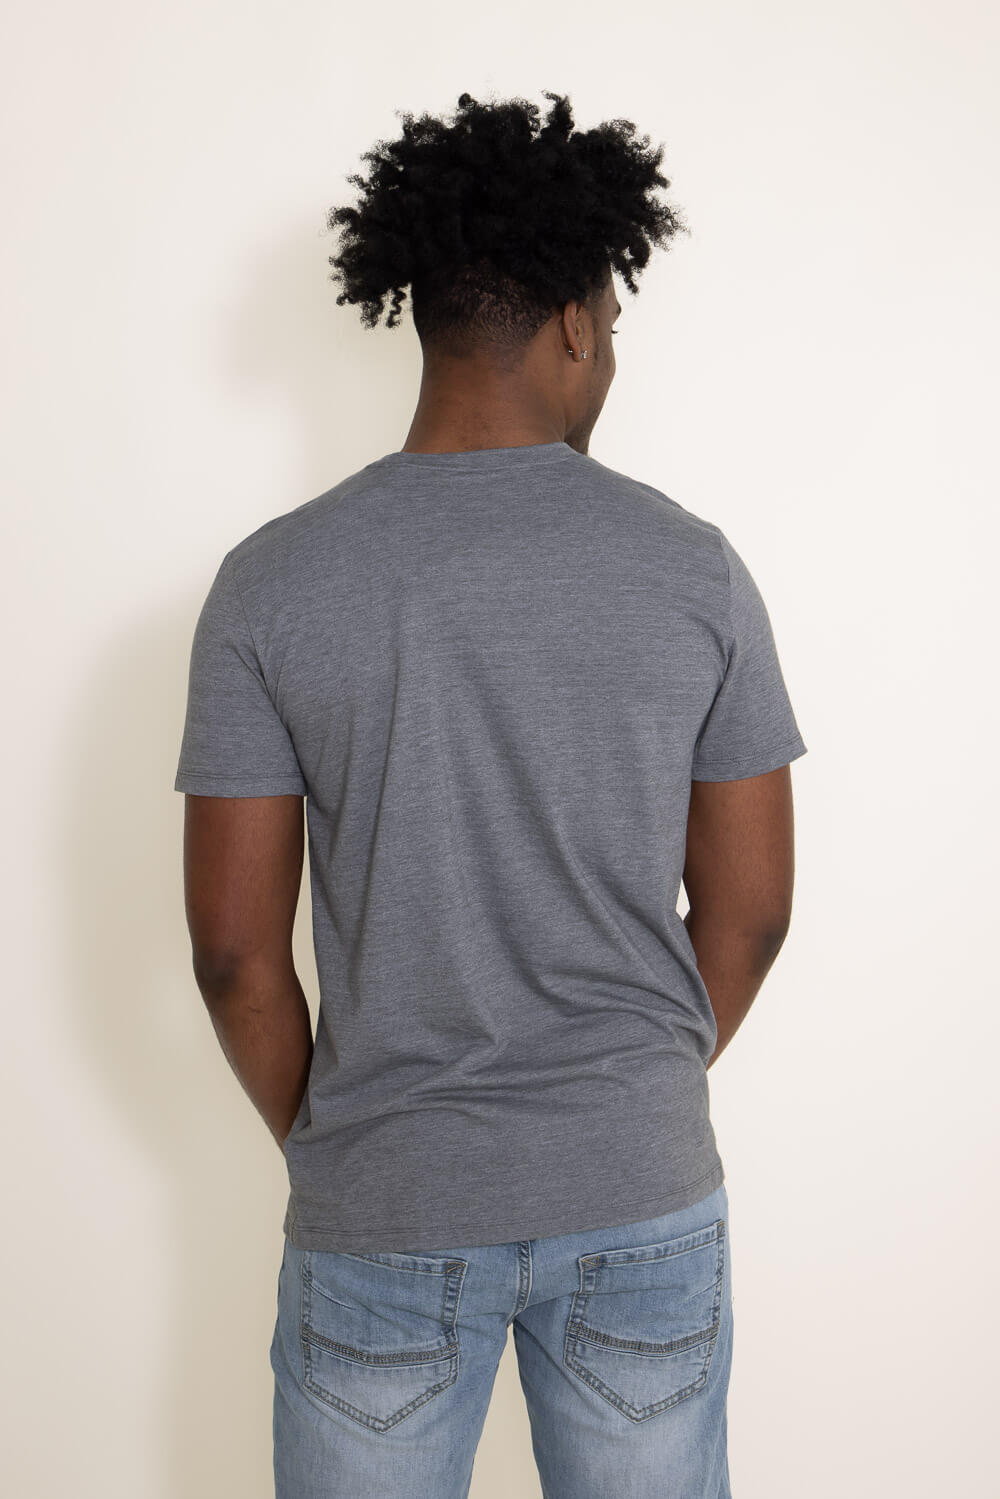 Carhartt Force Pocket T-Shirt for Men in Grey